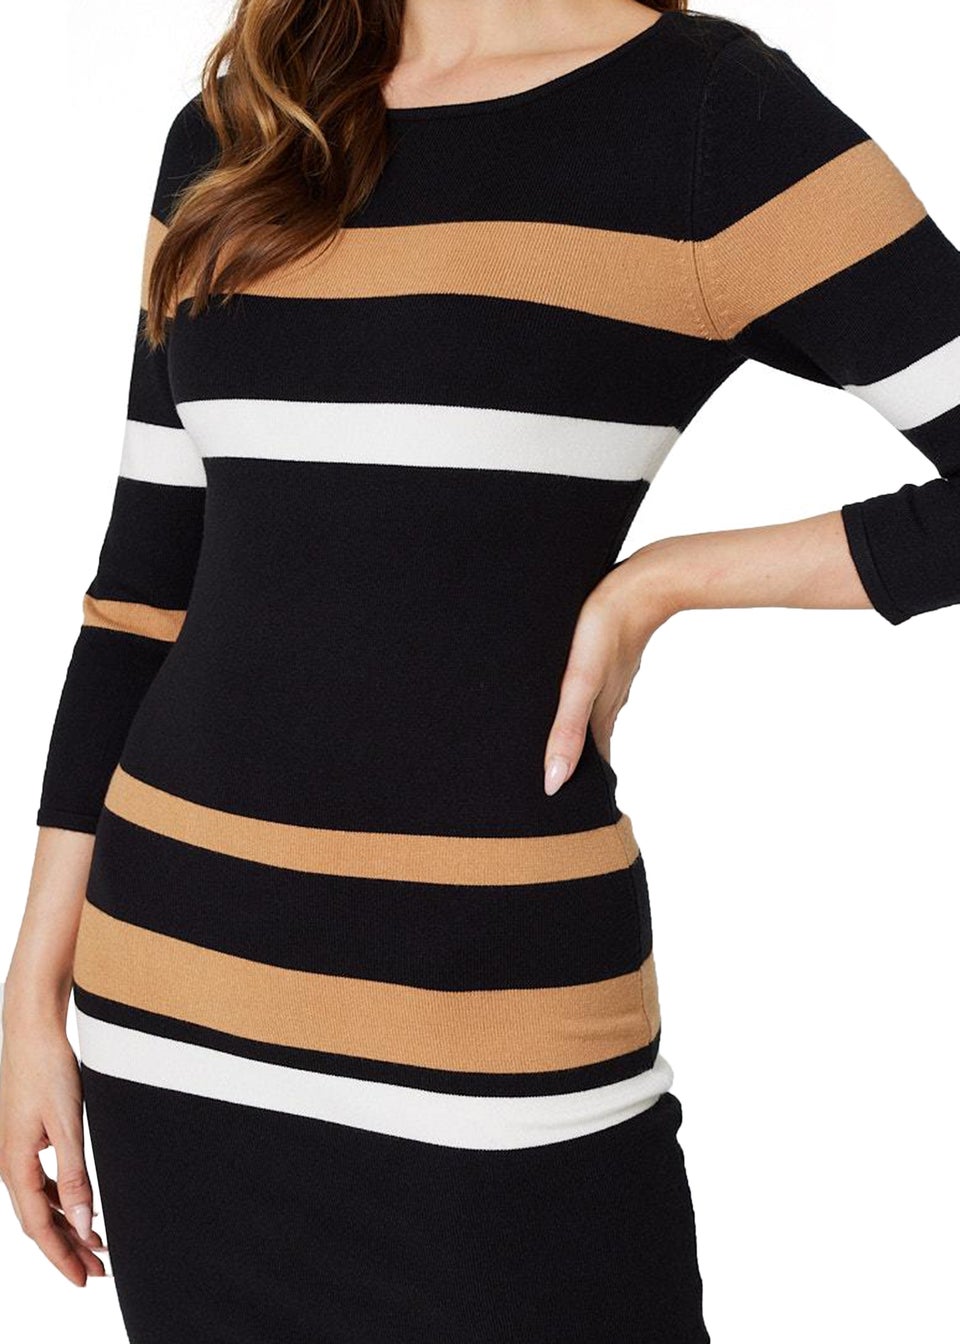 Izabel London Black Striped Bodycon Knit Dress